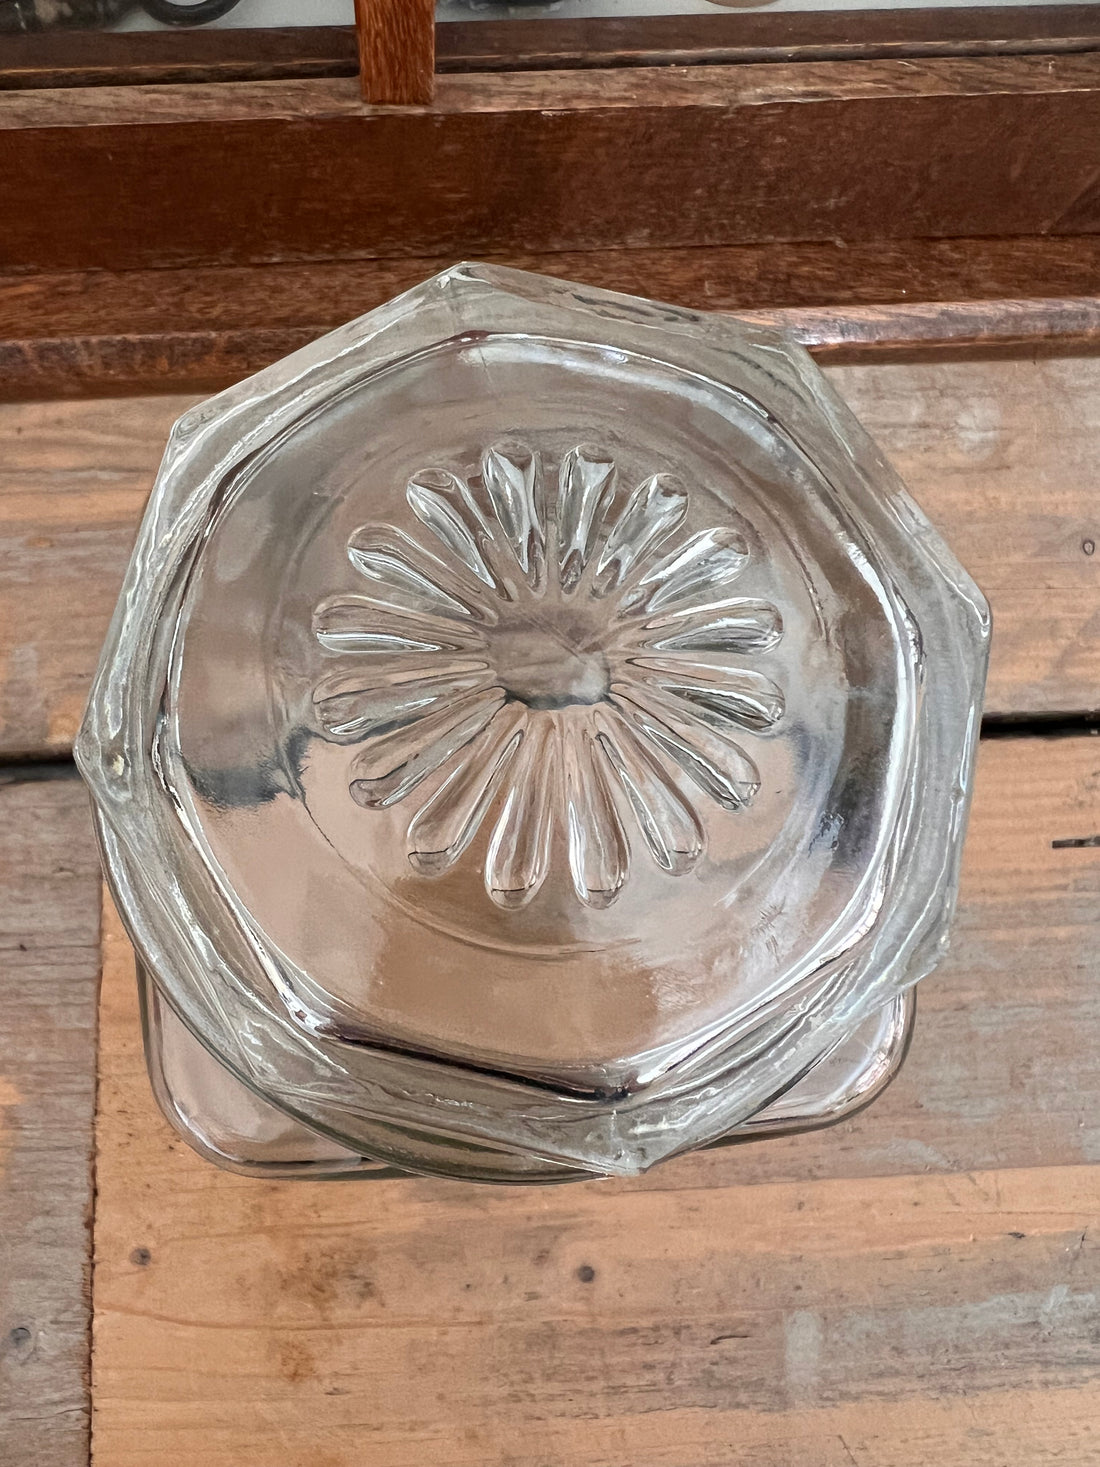 Vintage storage jar glass